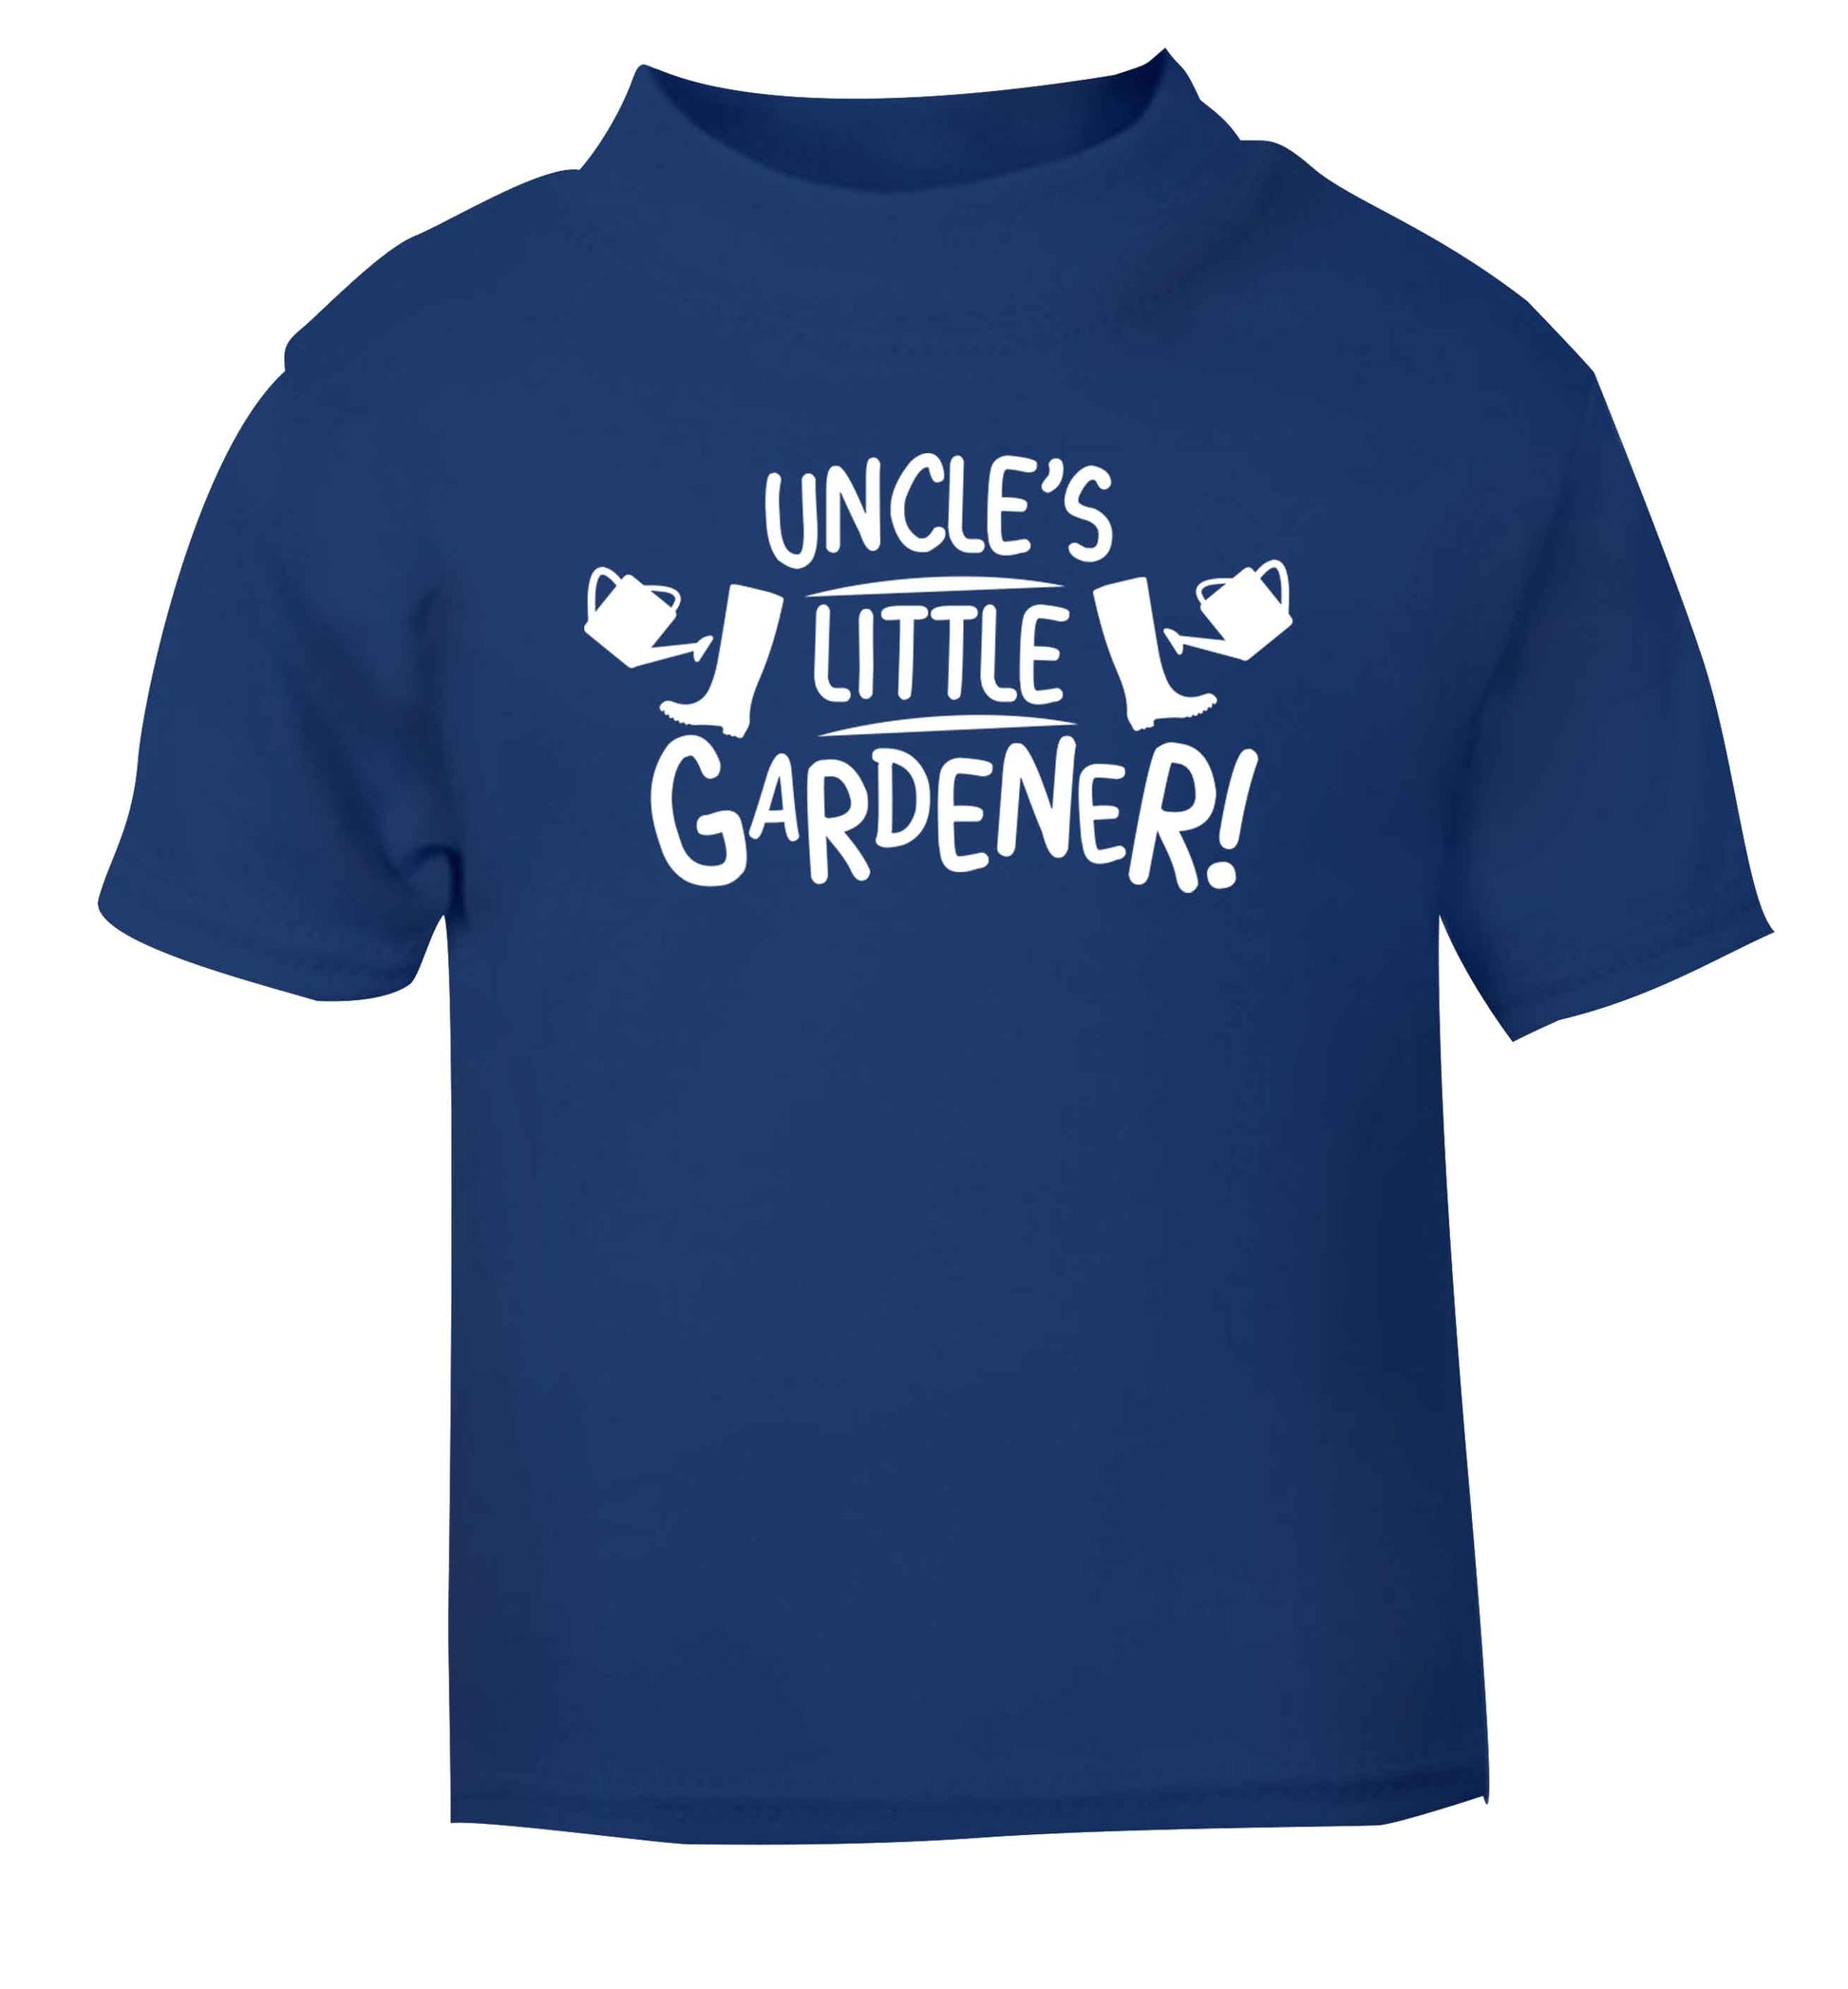 Uncle's little gardener blue Baby Toddler Tshirt 2 Years